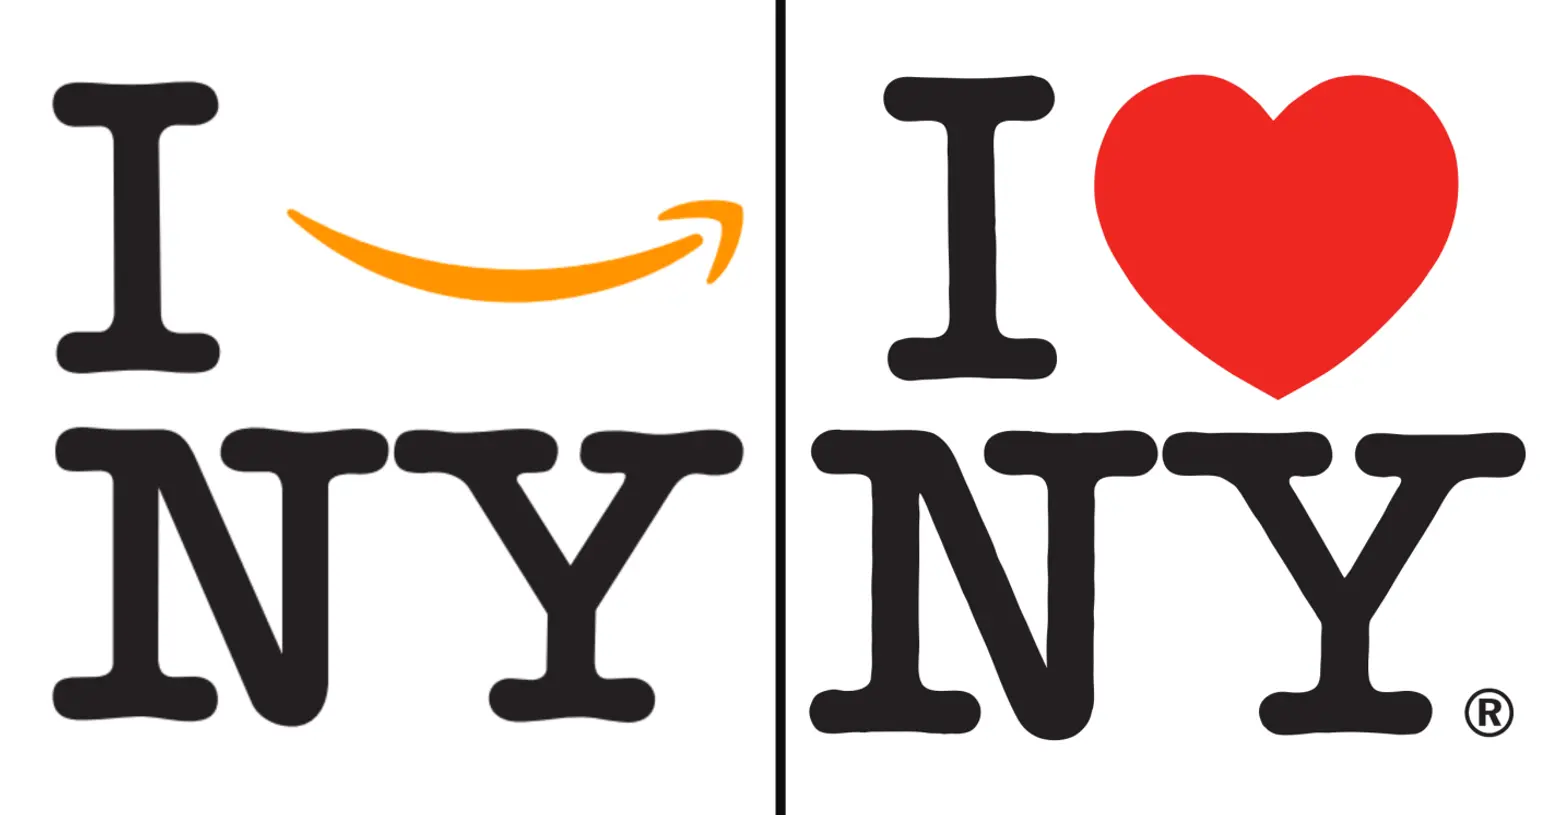 ‘I ♥ NY’ designer Milton Glaser not thrilled with Amazon rip-off